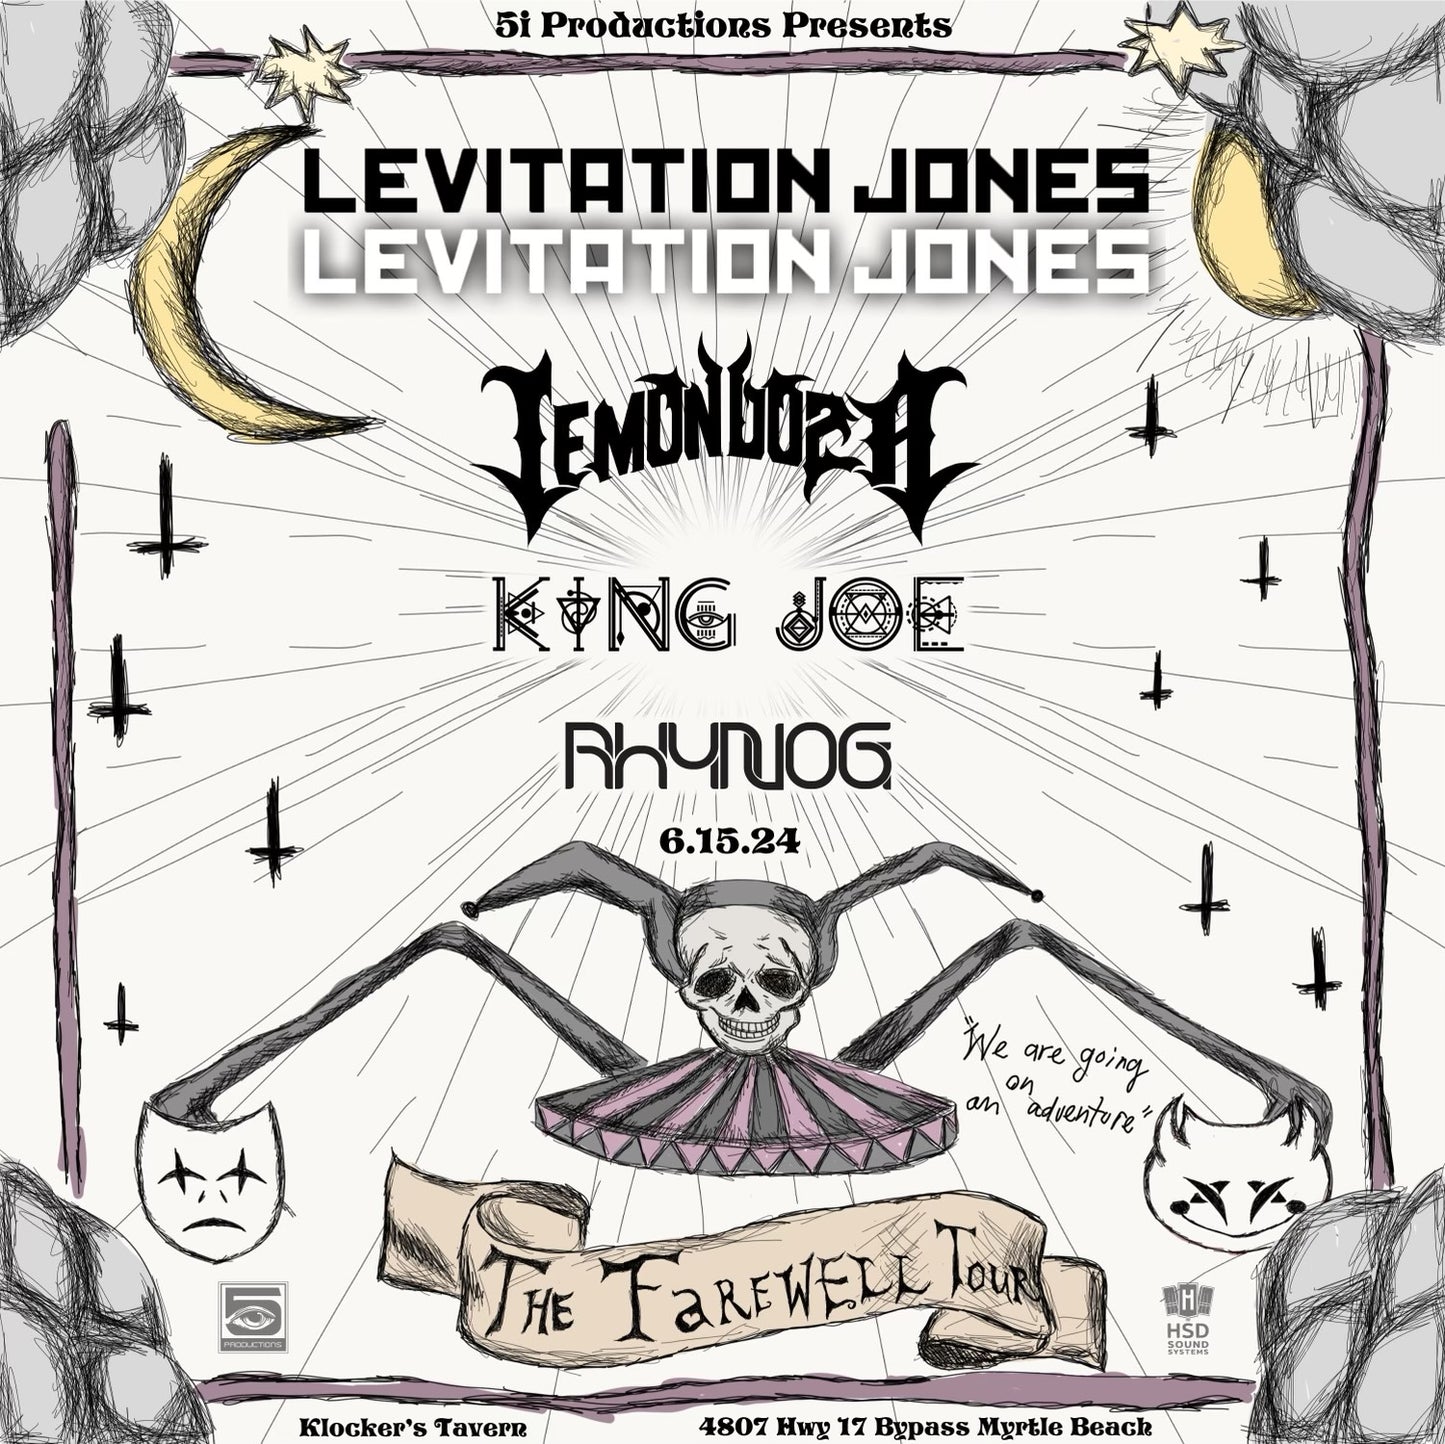 The Farewell Tour Ft Levitation Jones, Lemondoza, King Joe & RhynoG